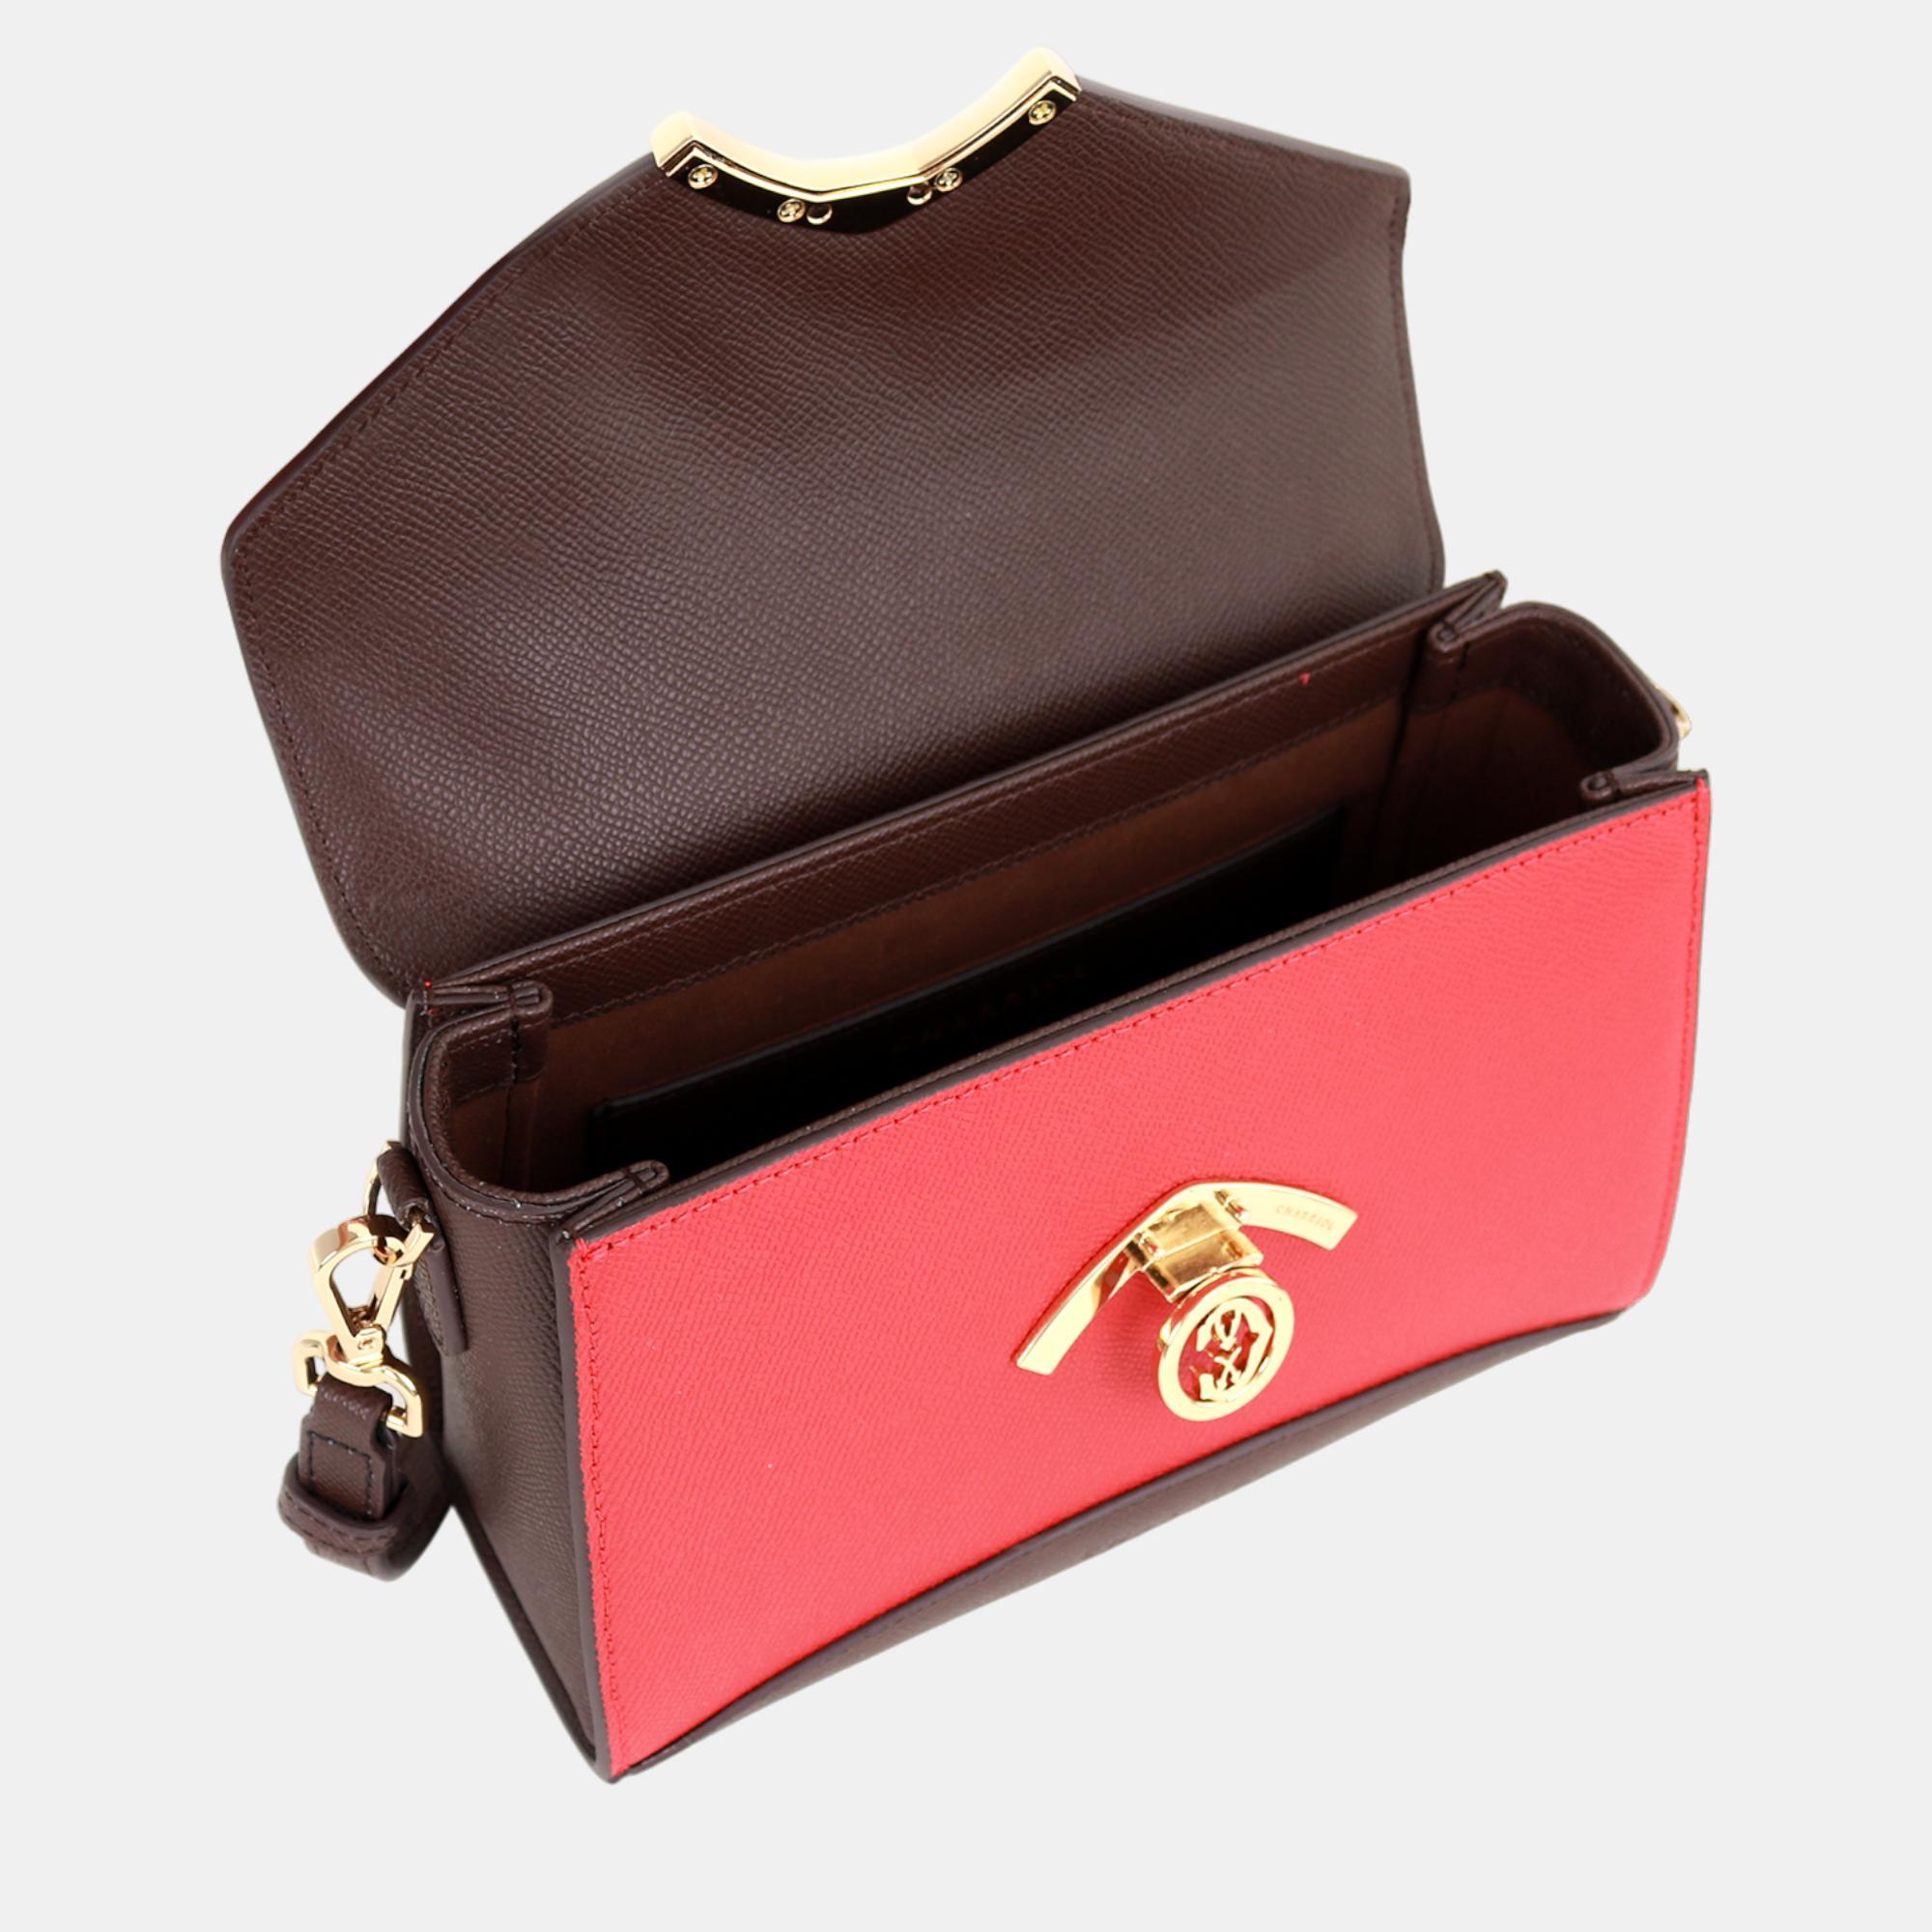 Charriol Brown/Red Leather Coralie Malia Handbag